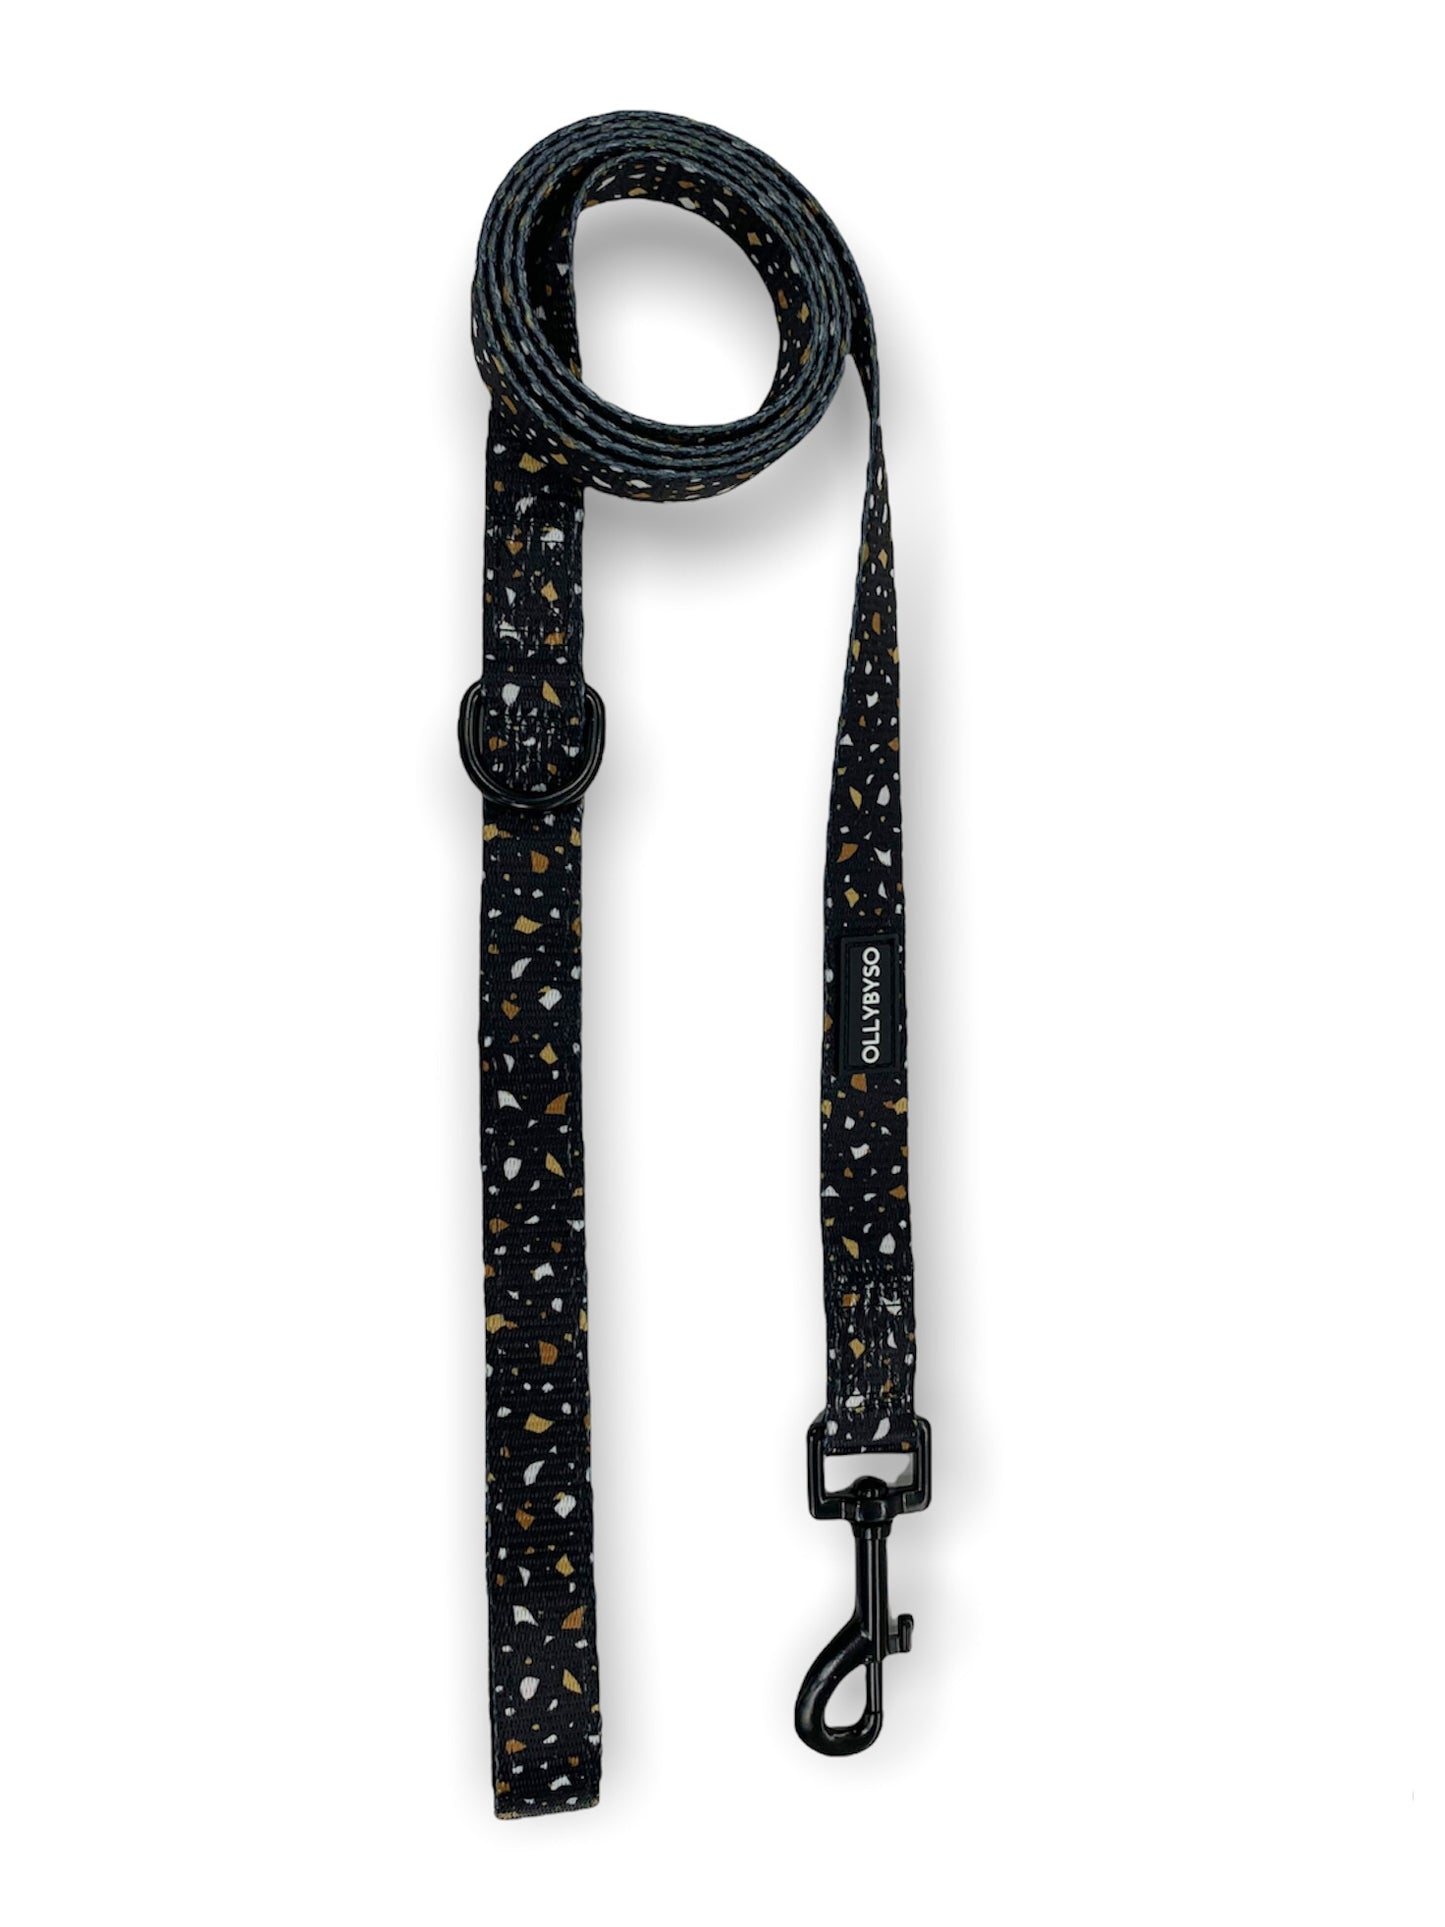 black dog lead, dog leash, dog accessories, adjustable dog harness, black dog harness